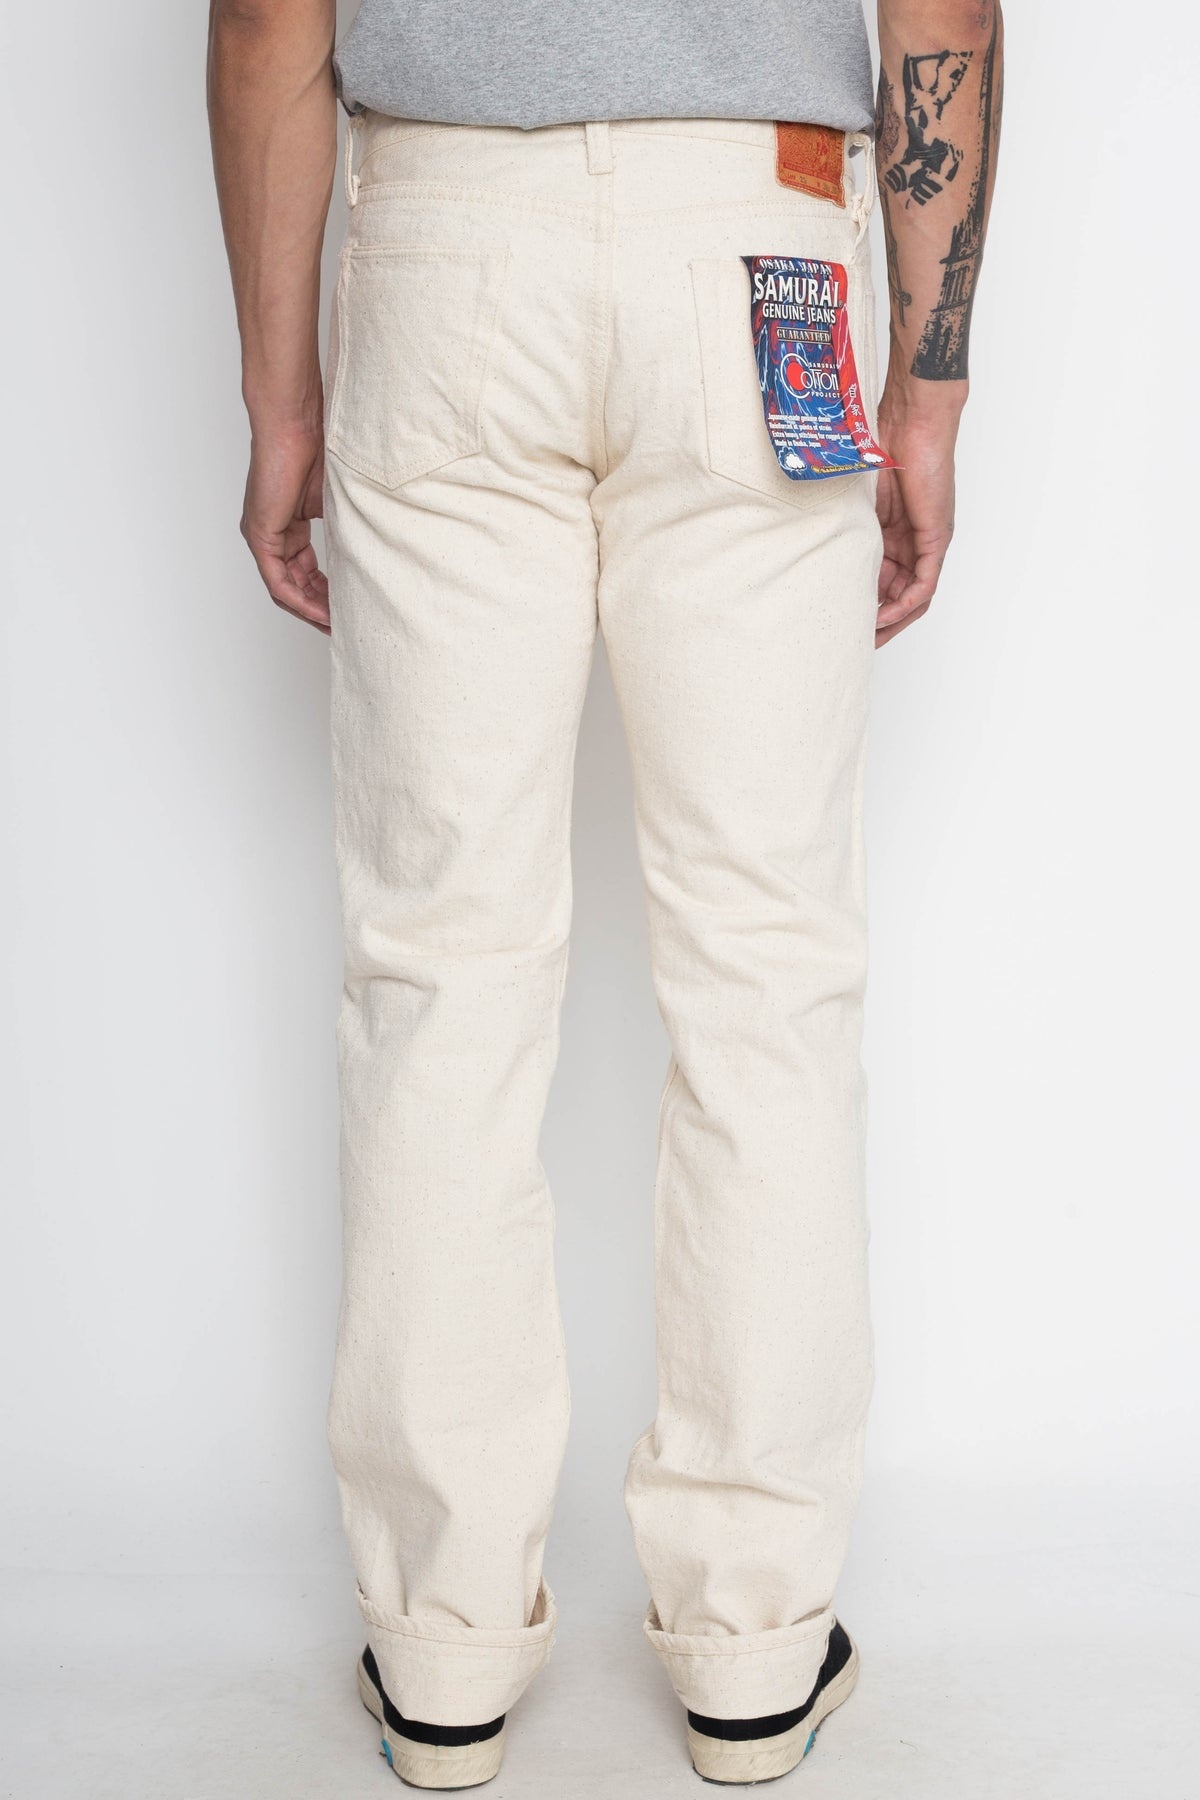 Samurai Jeans S710SC-KI Japanese Cotton Ecru 18oz Slim Straight Jeans